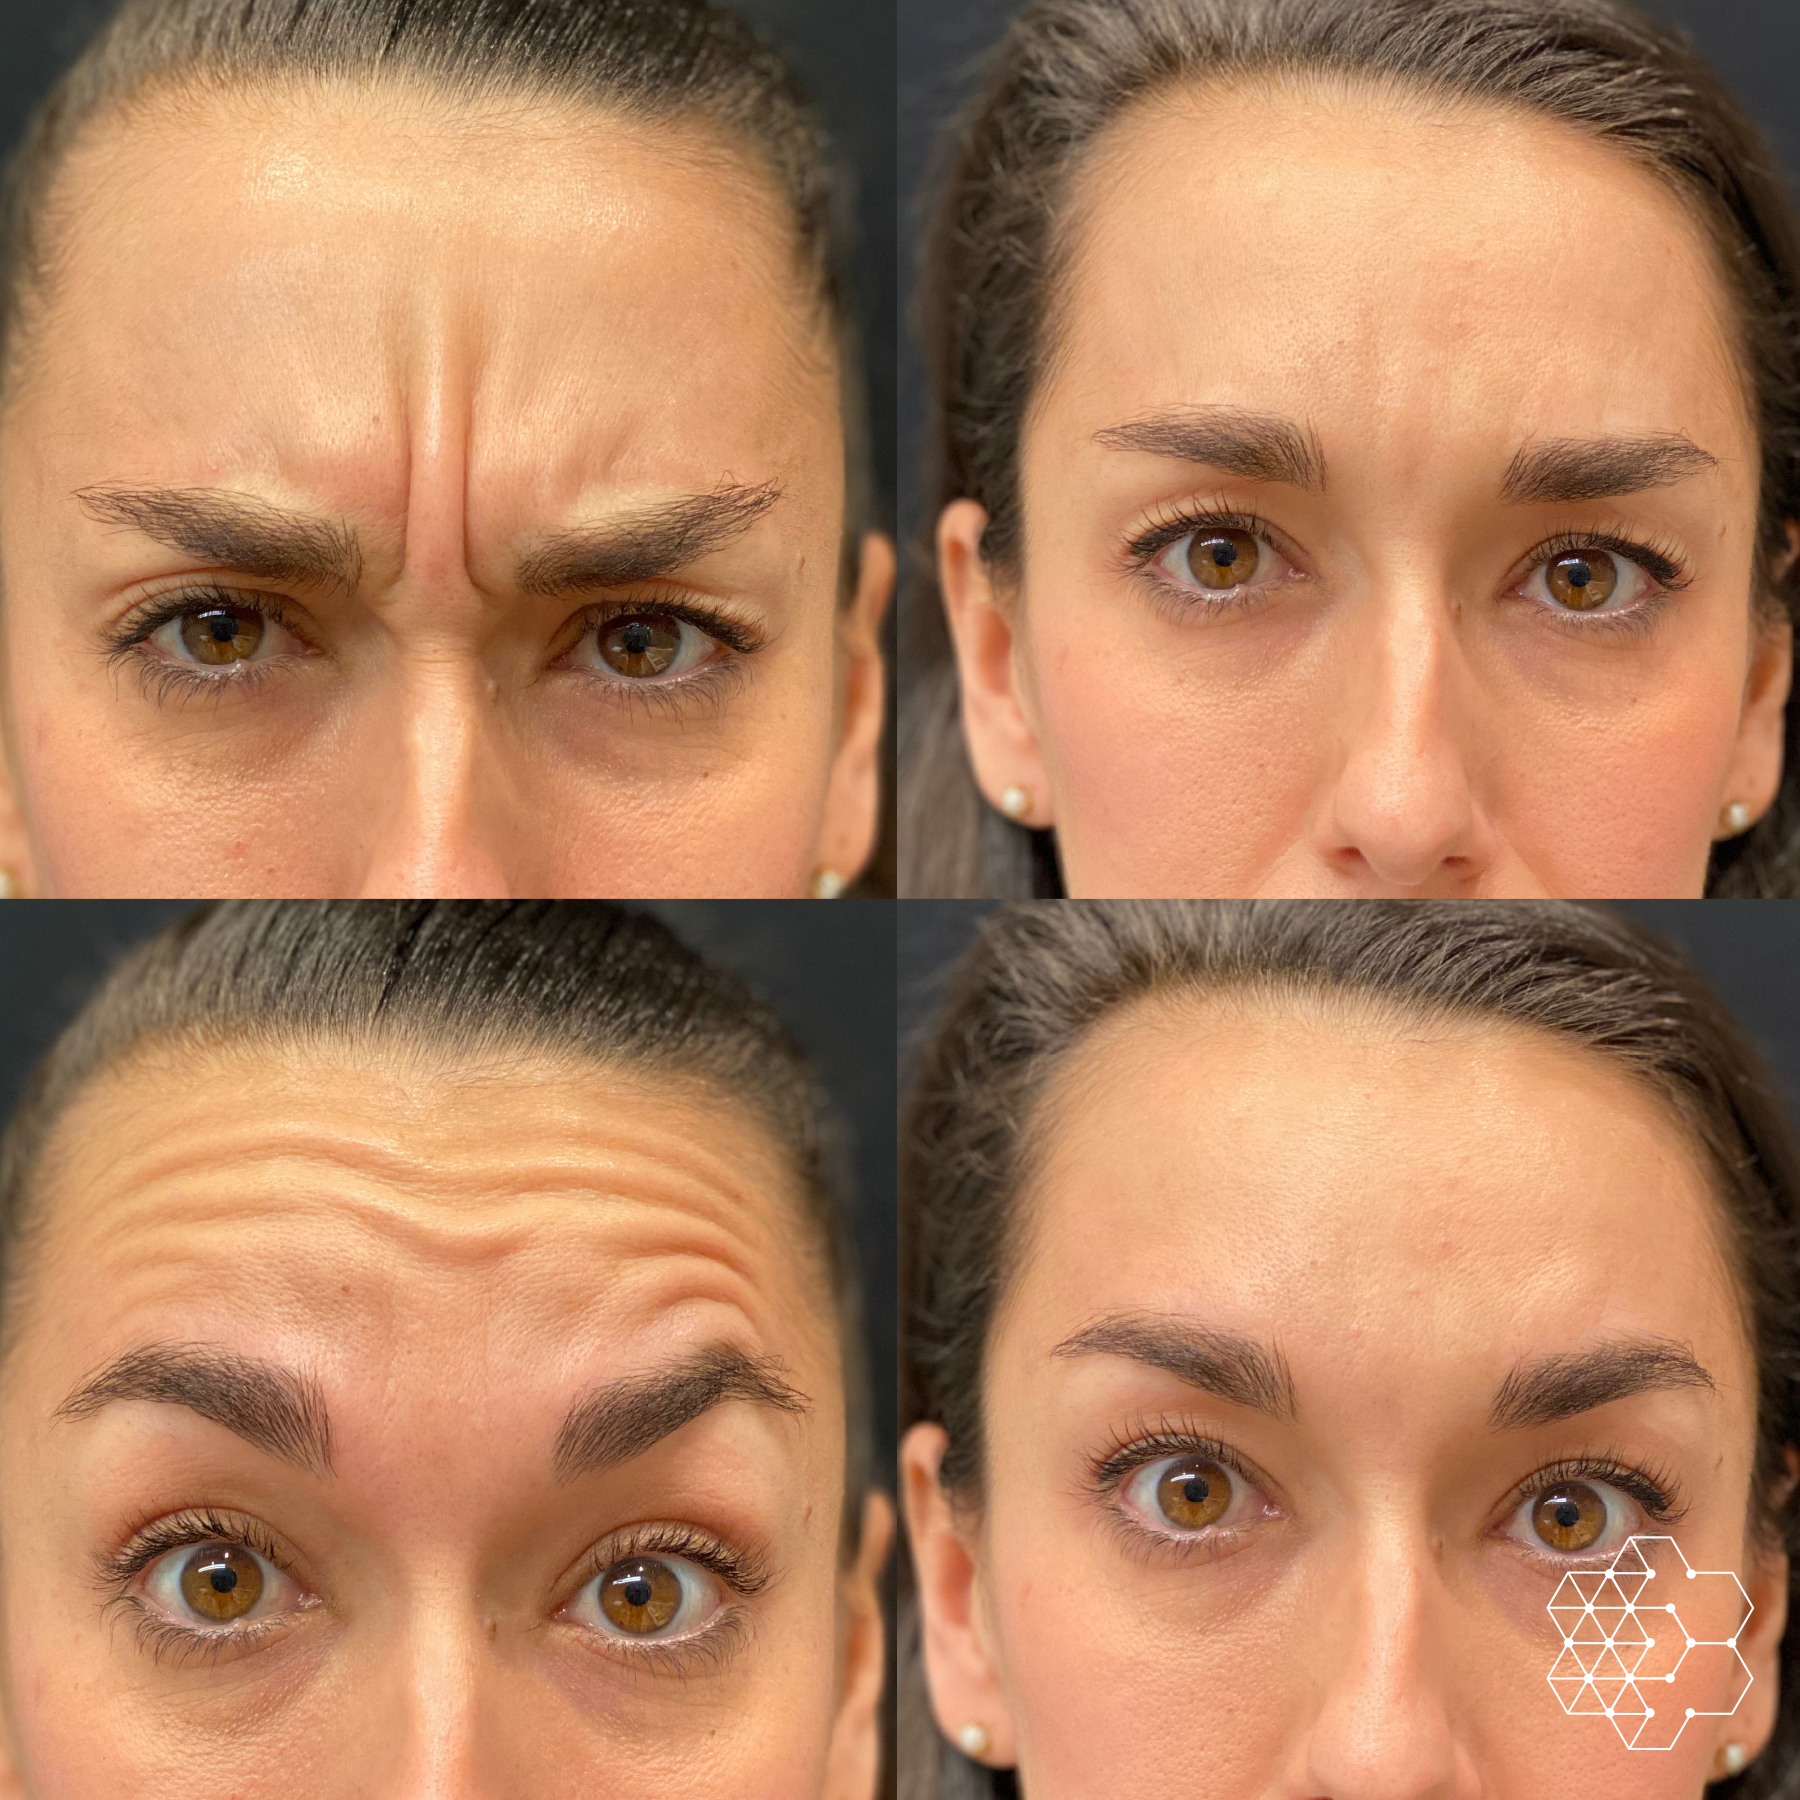 Top 5 Facial Areas for Botox Treatments